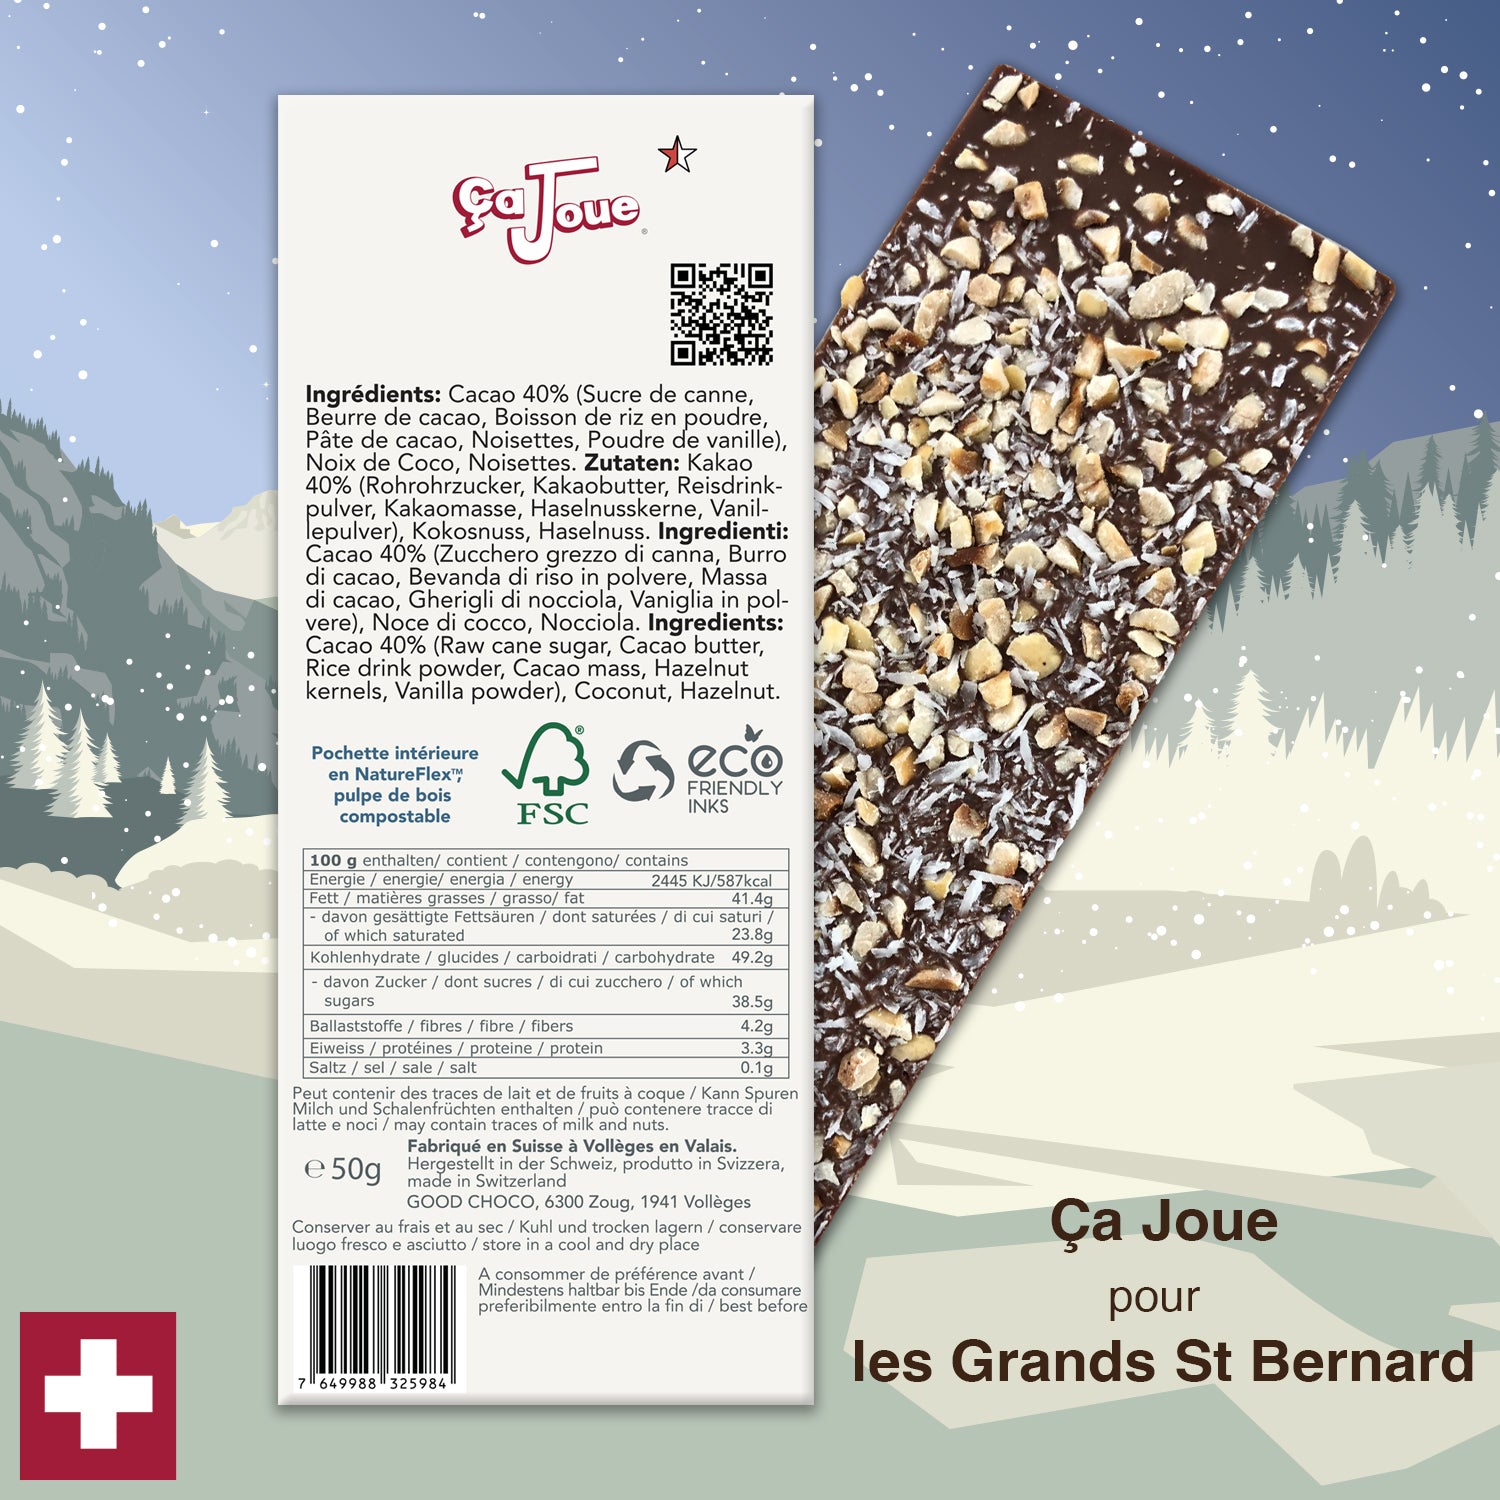 Ça Joue for the St Bernard (Ref-BV3) Chocolate from Val de Bagnes